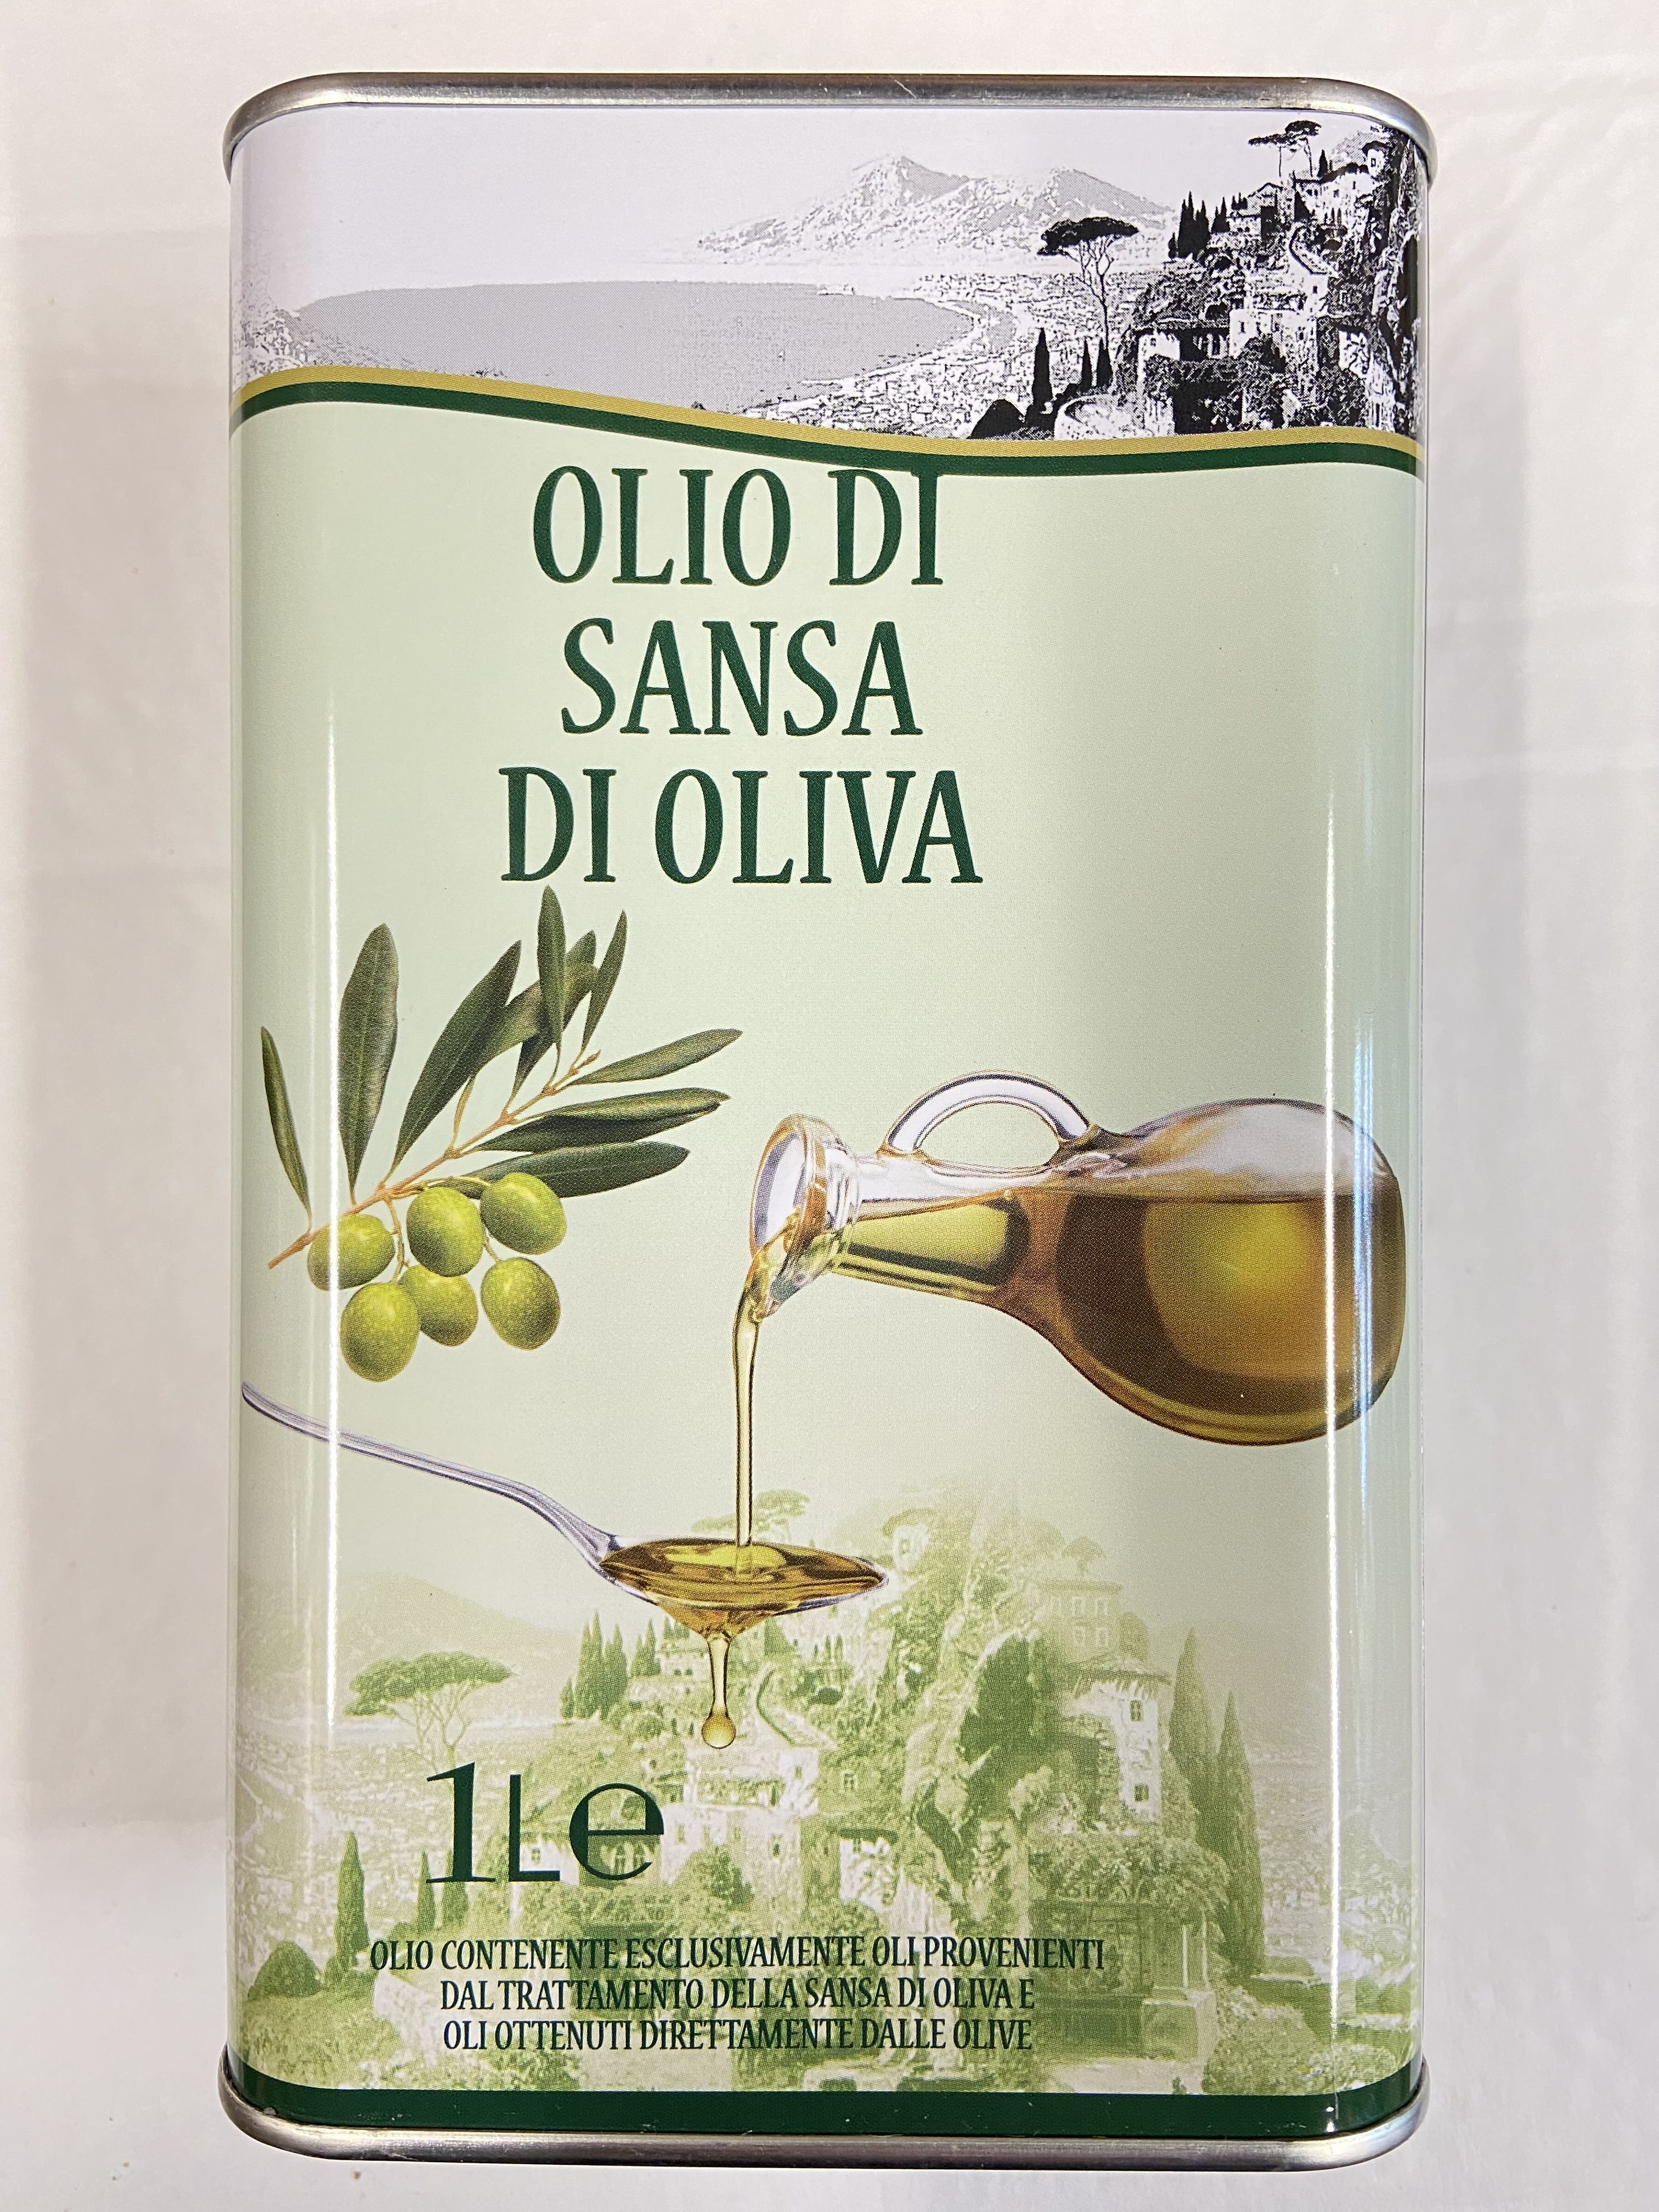 Масло оливковое sansa. Масло оливковое Vesuvio Sansa di Oliva, 1 л (Италия). Оливковое масло Vesuvio olio di Sansa di Oliva. Оливковое масло Pomace Olive Oil, 1 л. Масло оливковое 1л olio di Sansa.